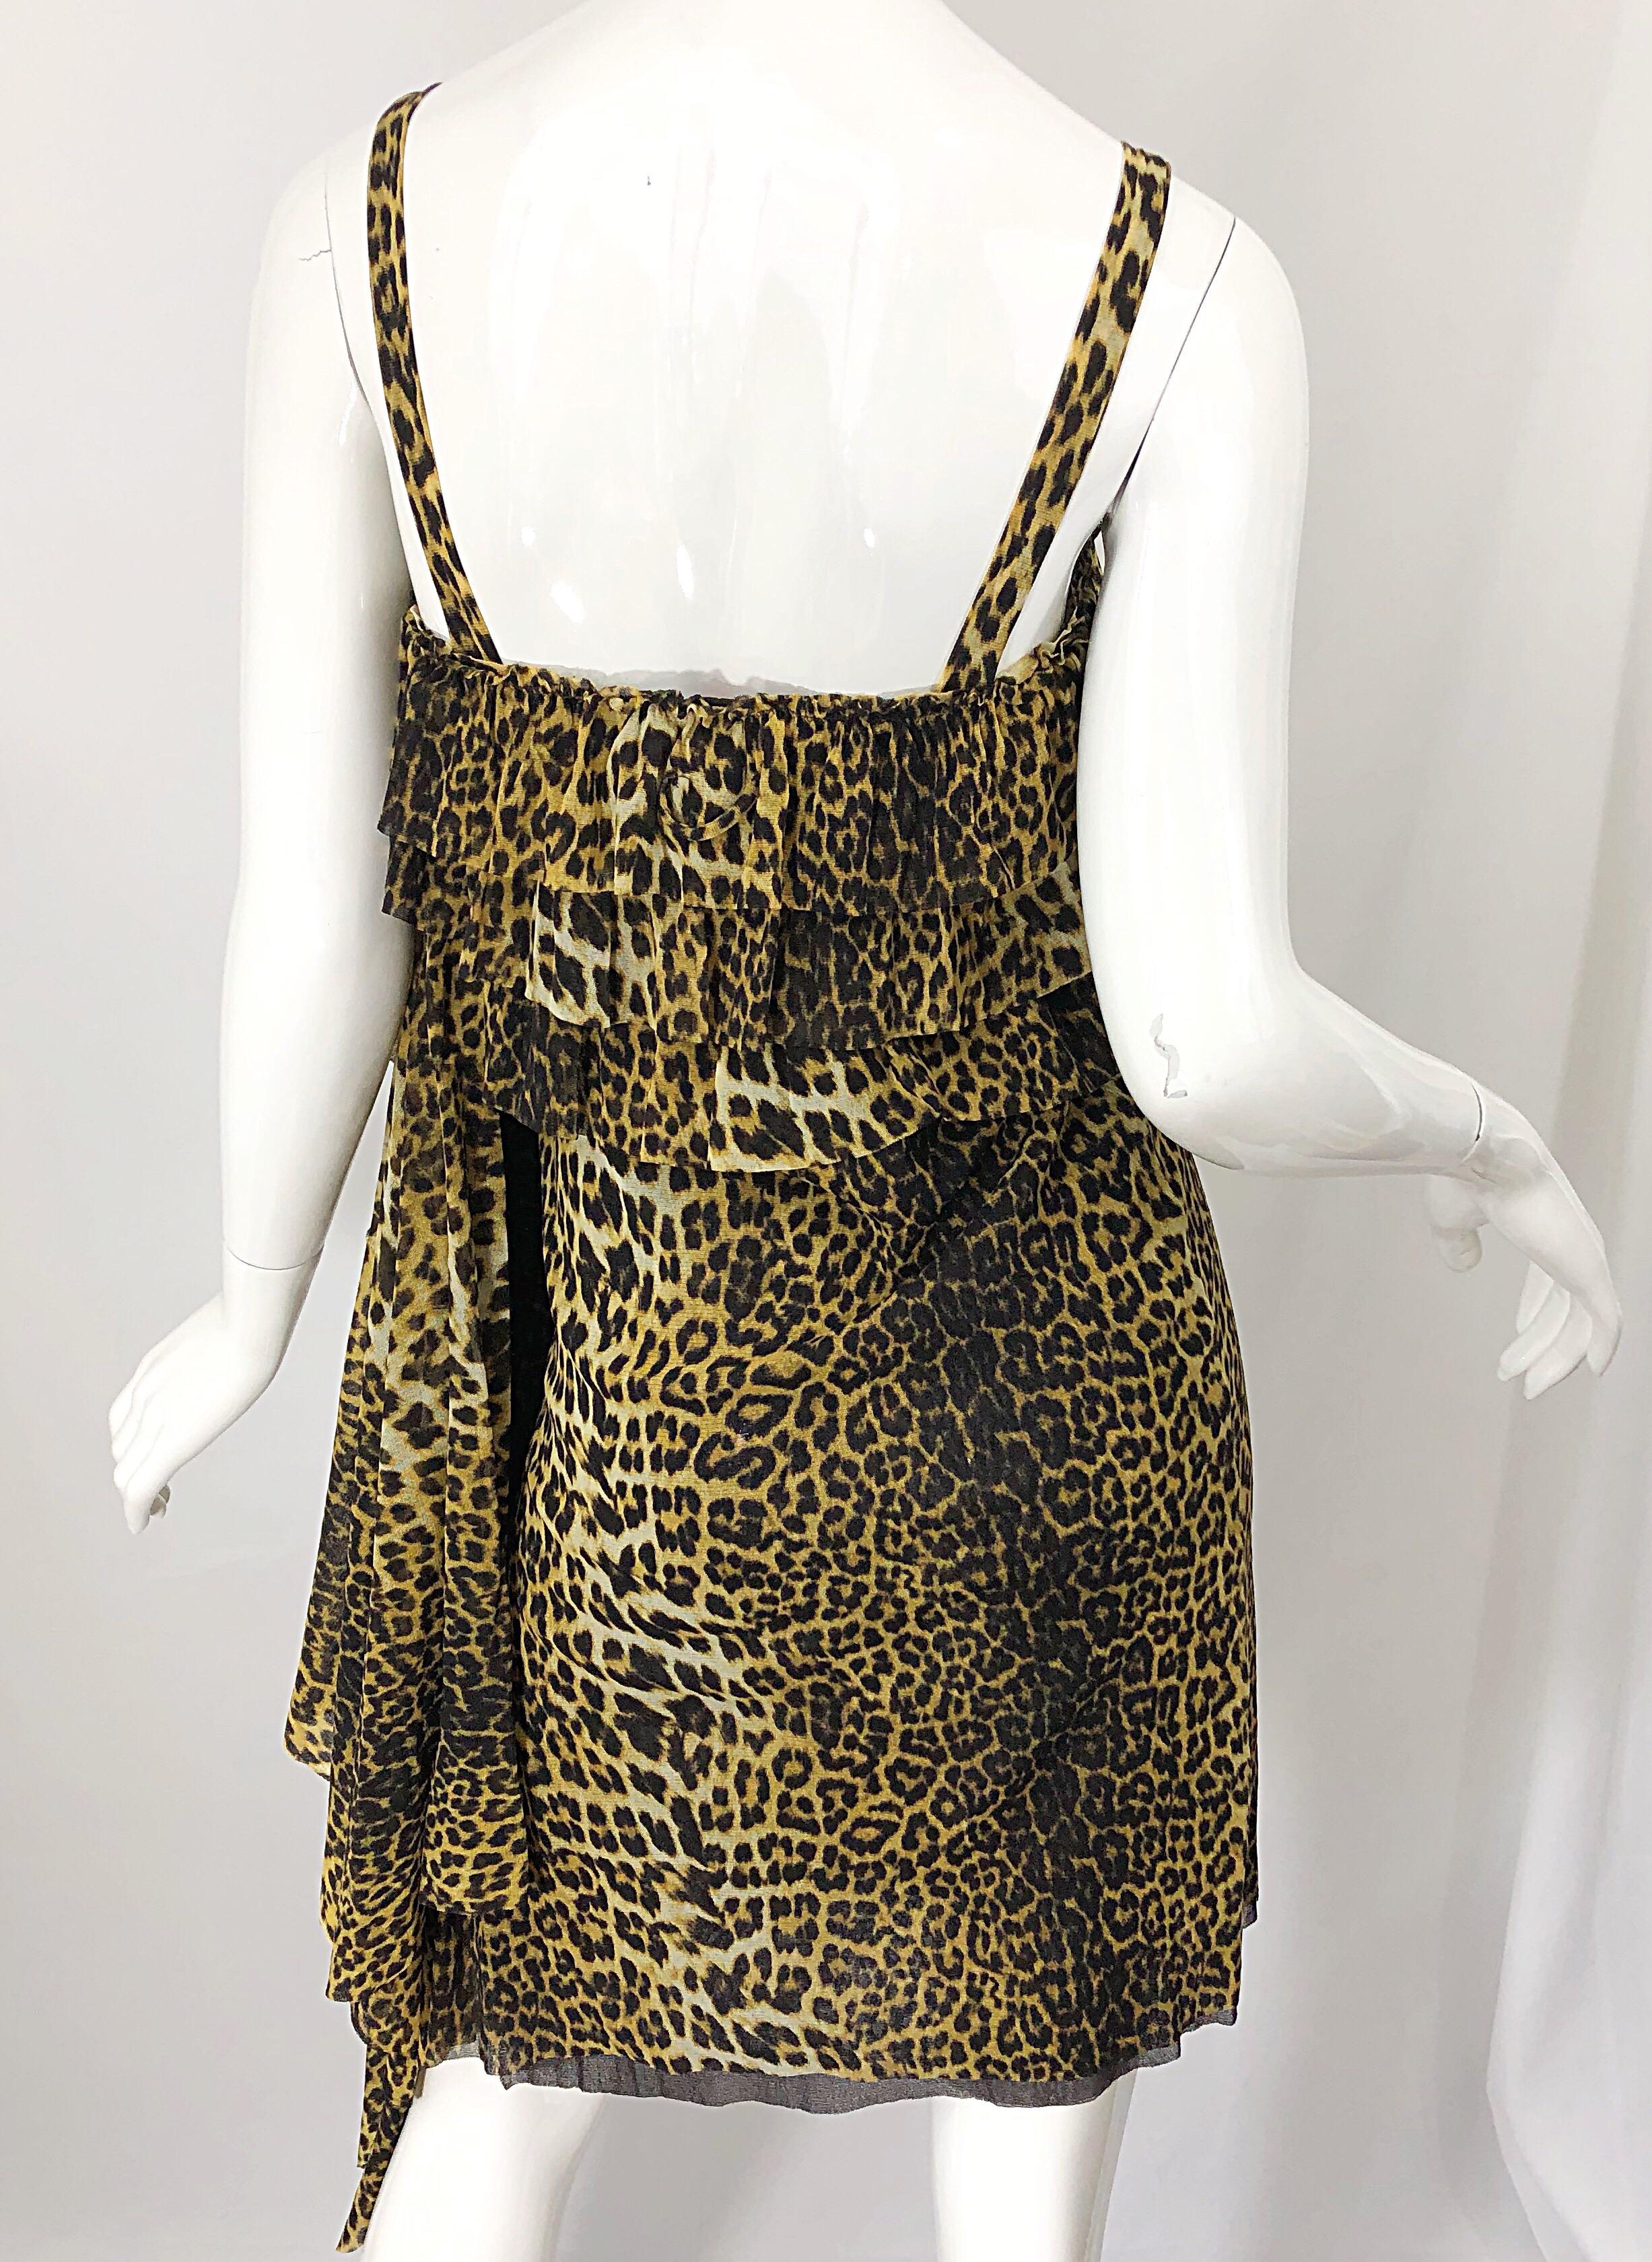 Vintage Jean Paul Gaultier 1990s Leopard Cheetah Animal Print 90s Sash Dress For Sale 5